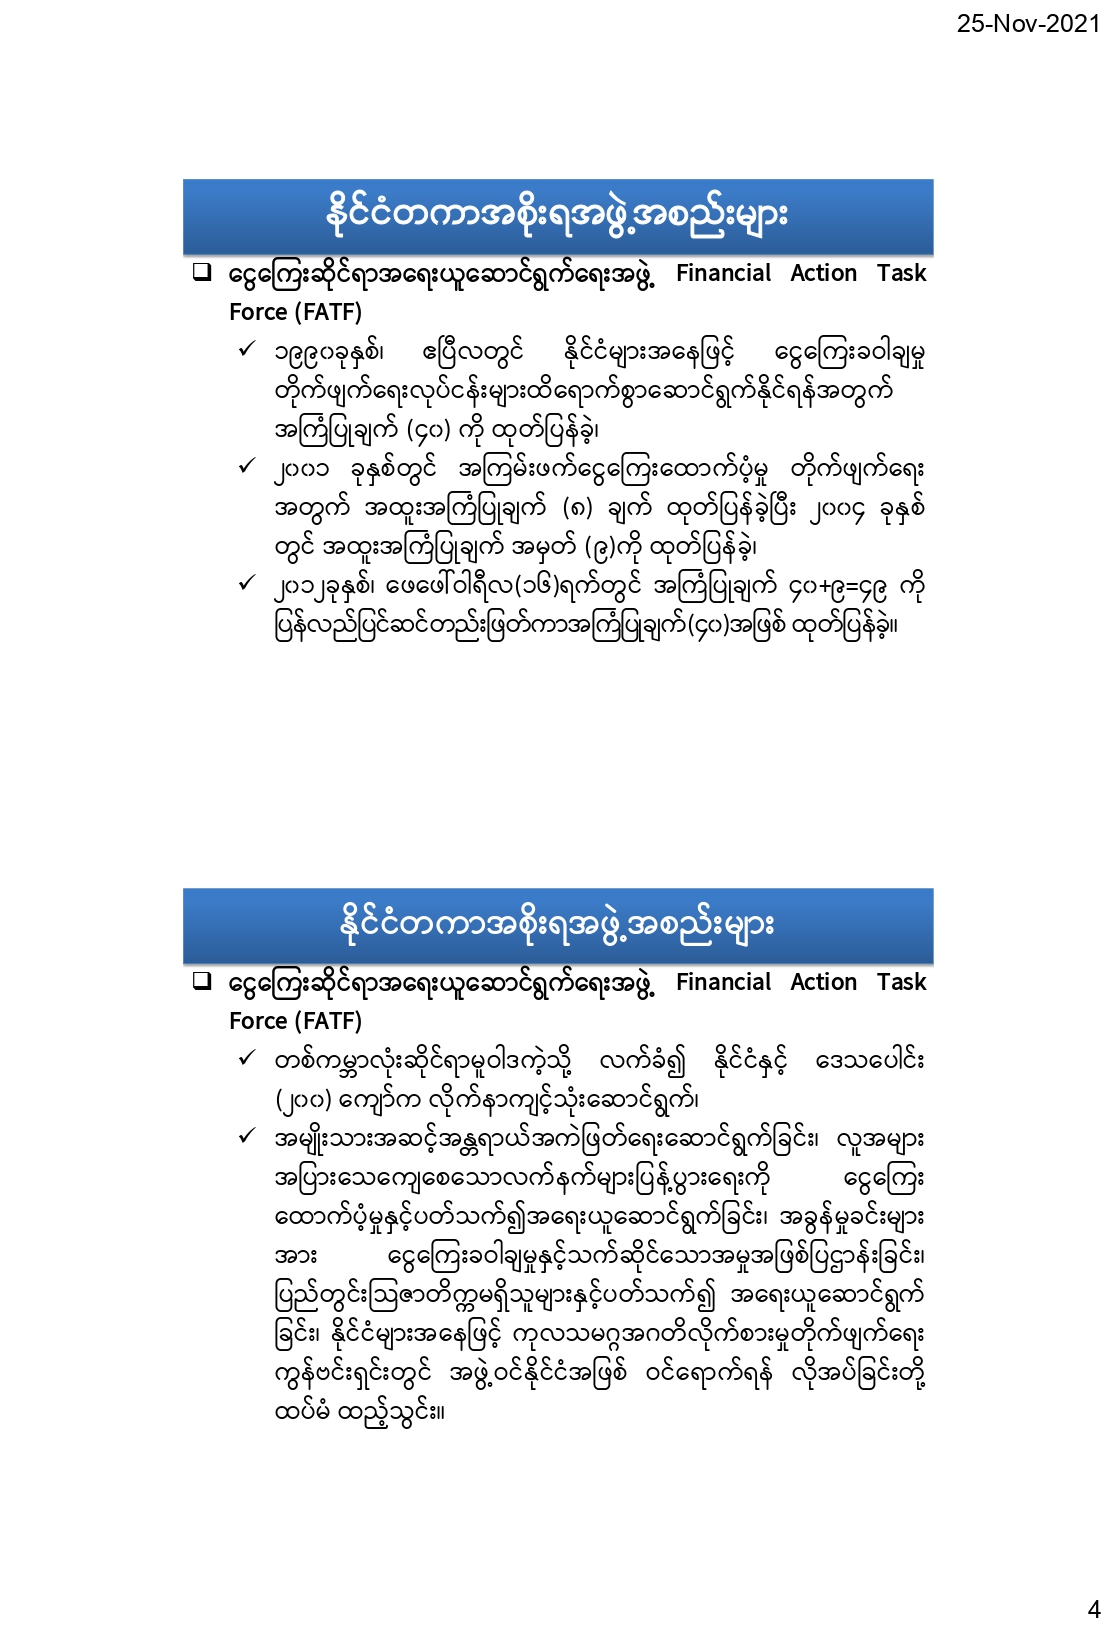  International Standard & Myanmar Effort AML